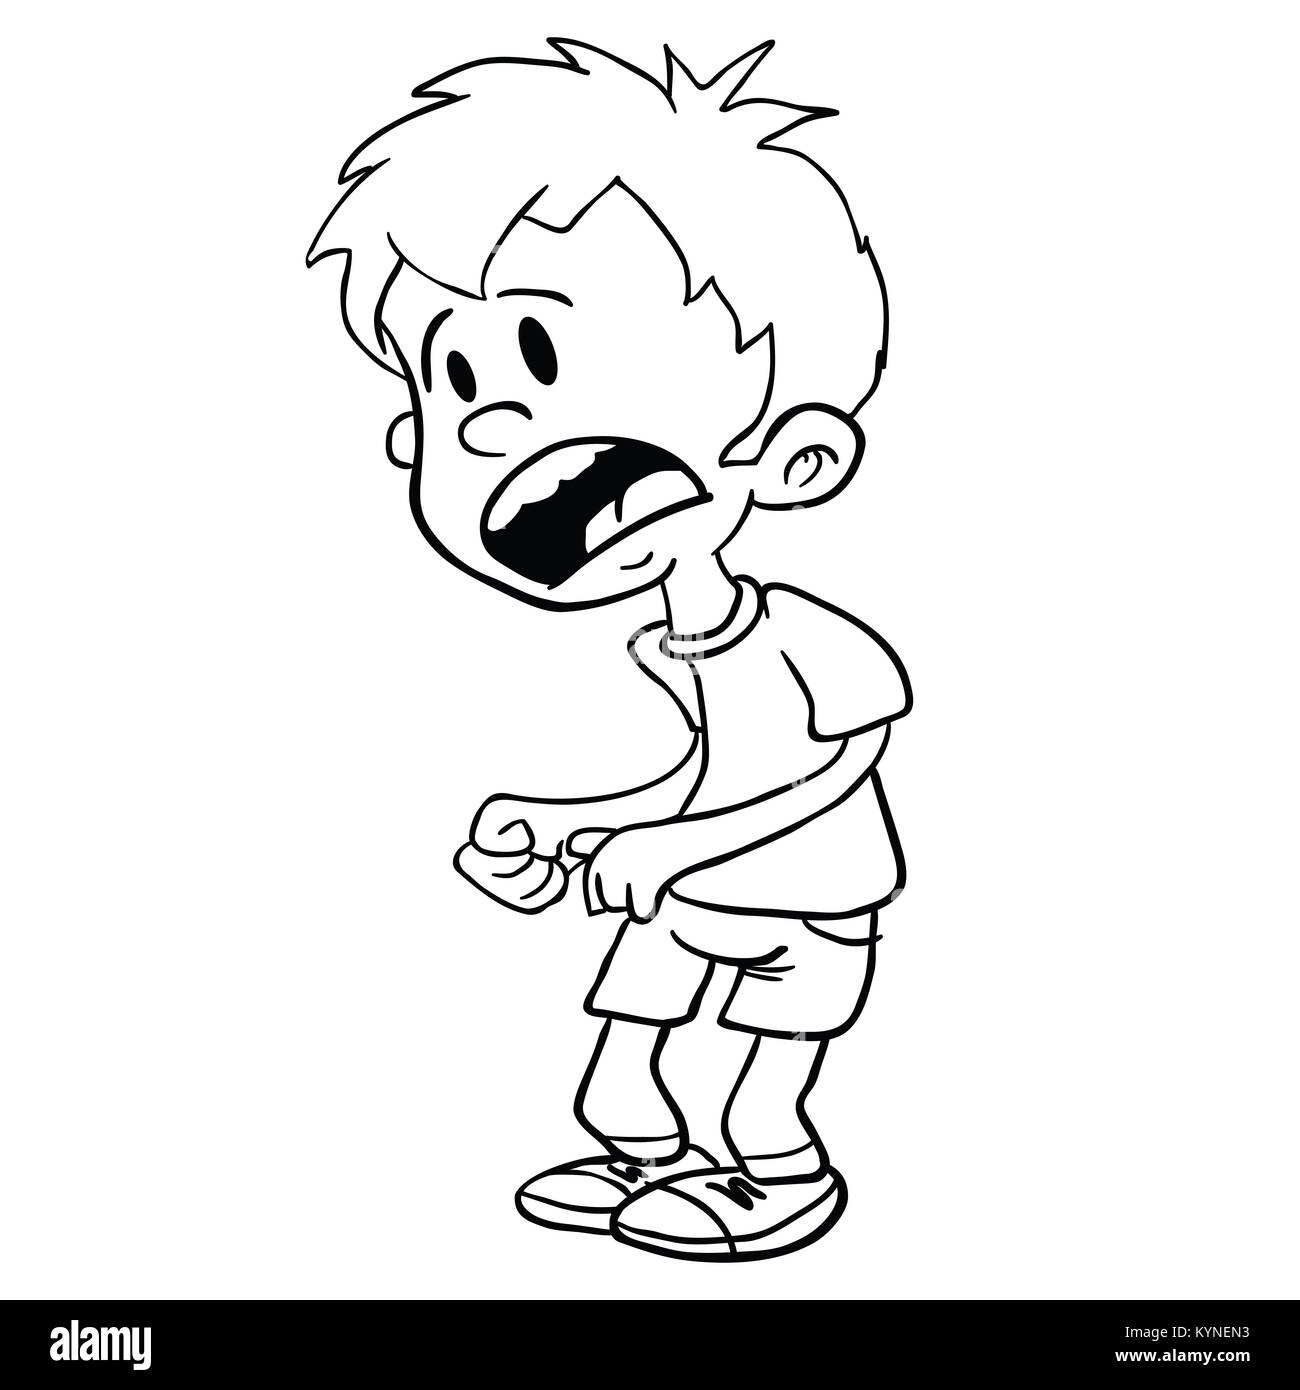 scared little boy cartoon illustration isolated on white Stock Photo